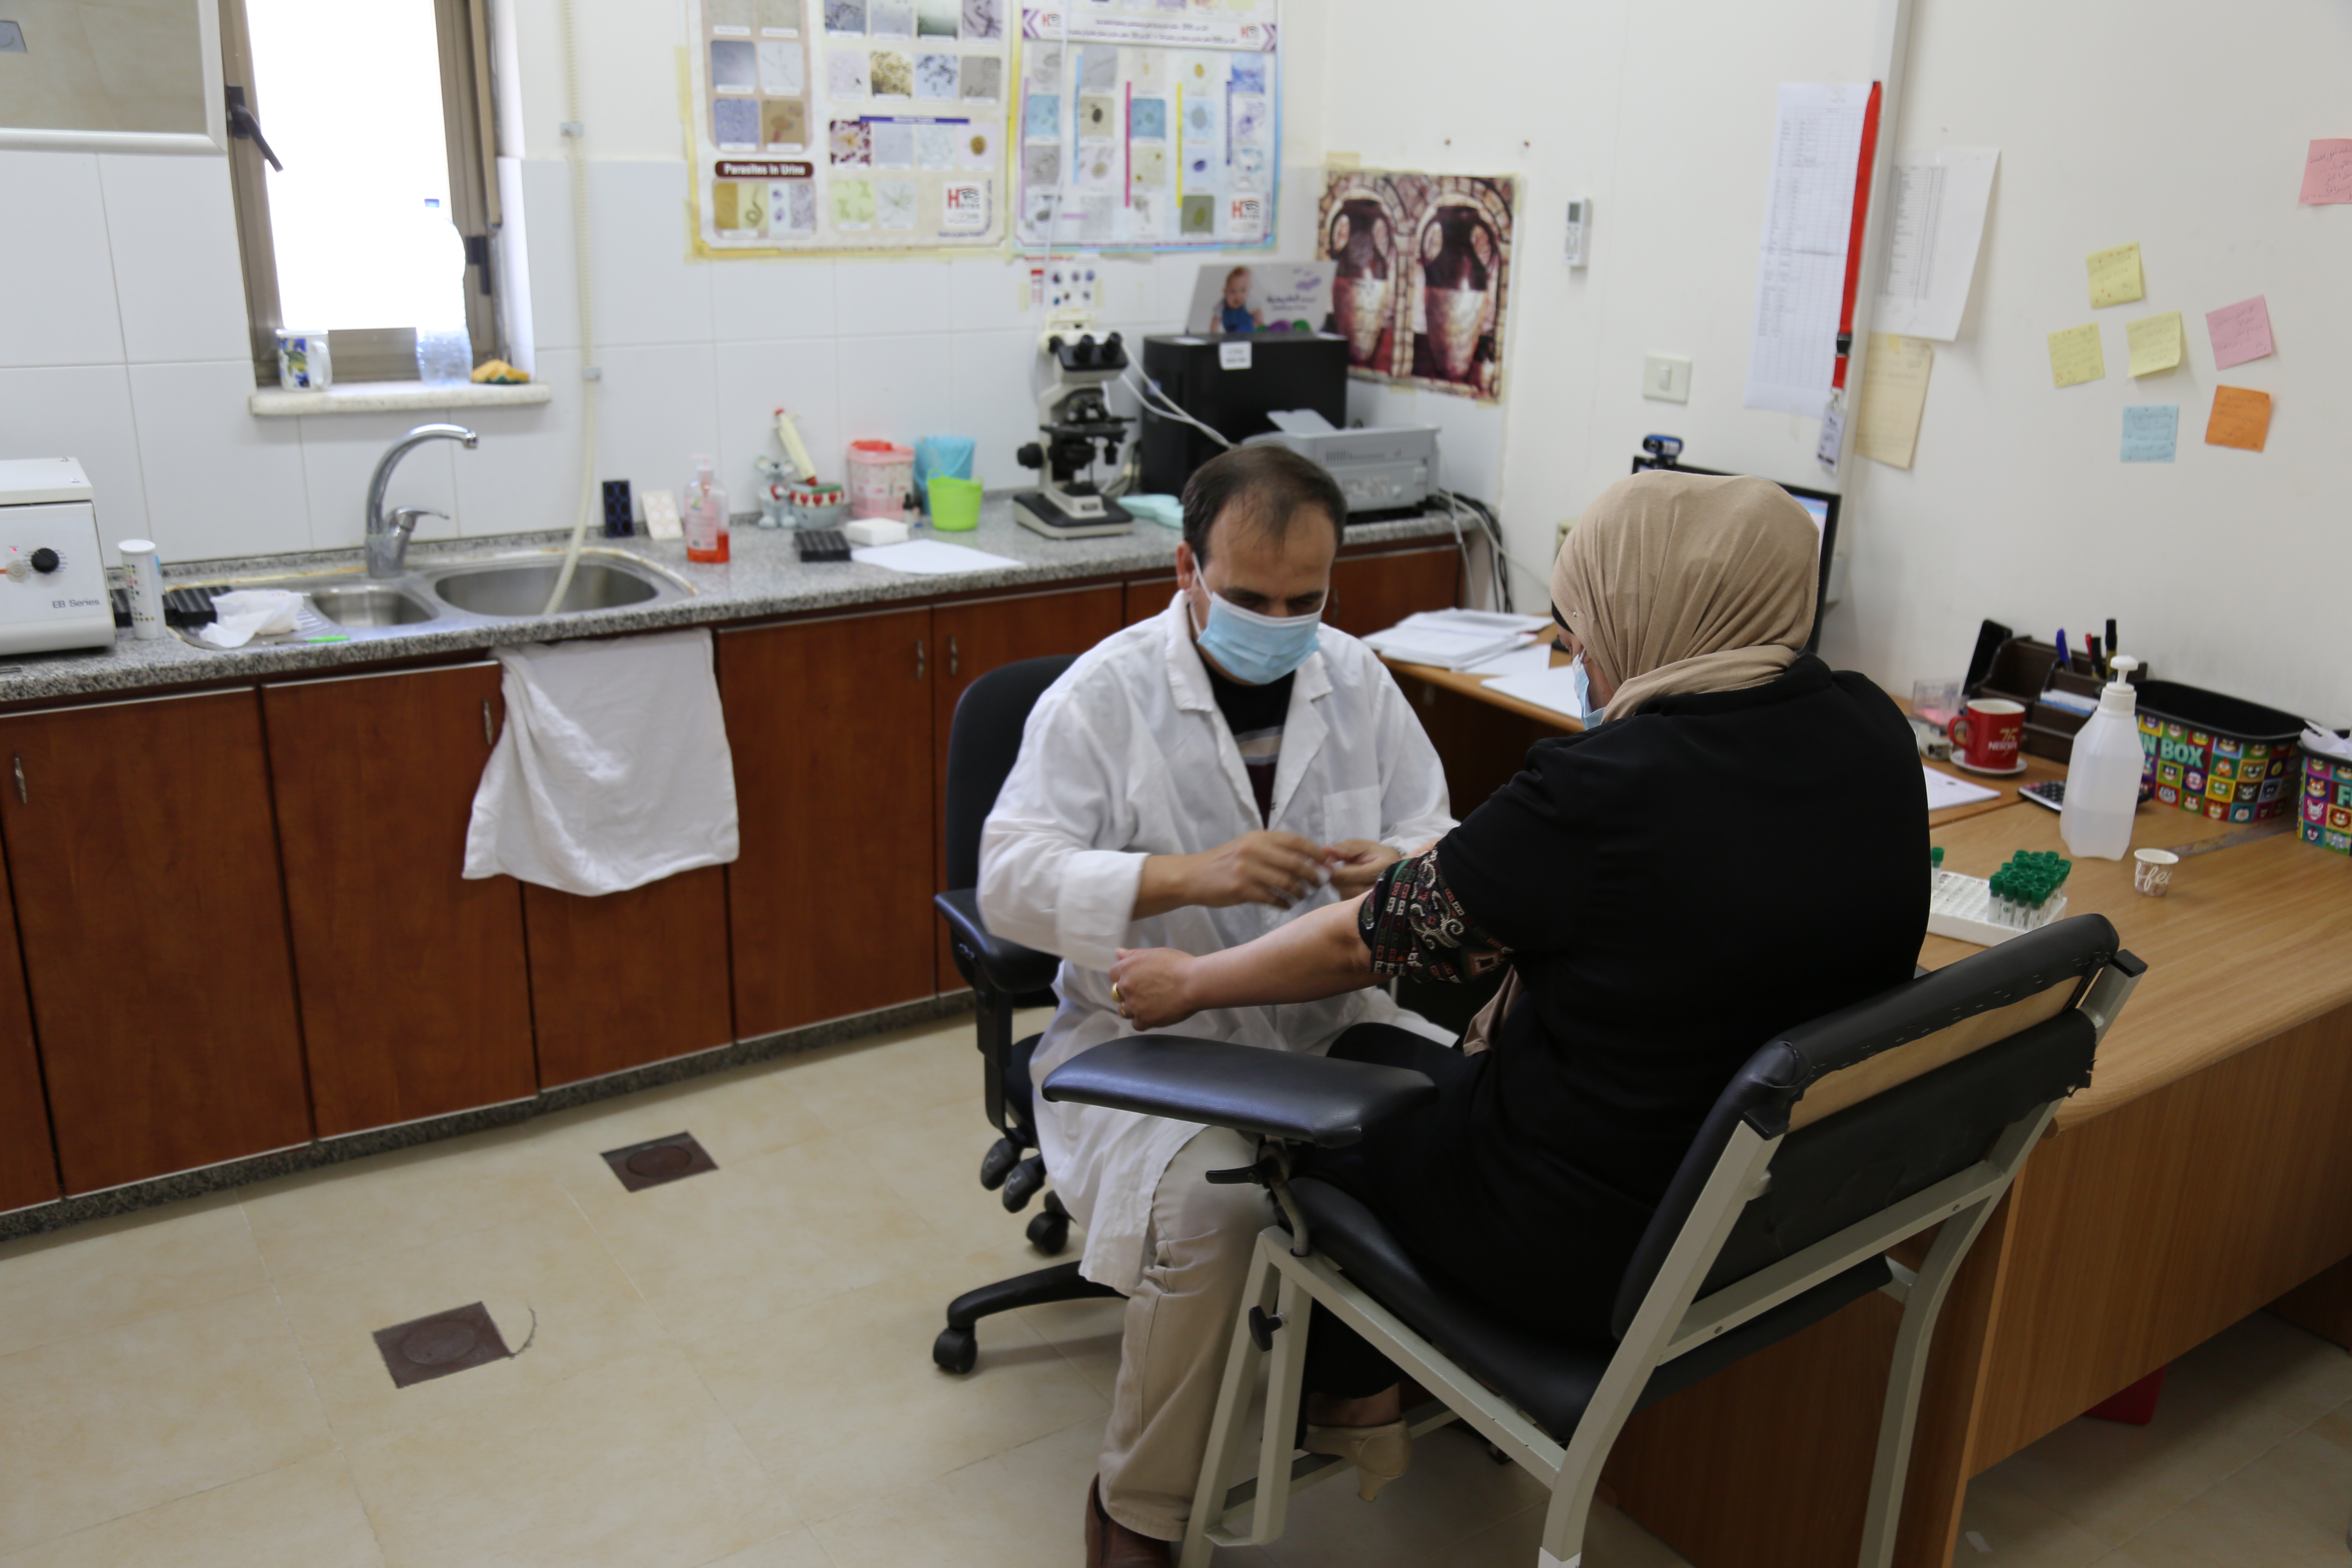  treatment at the Taybeh clinic photo: Caritas Polska